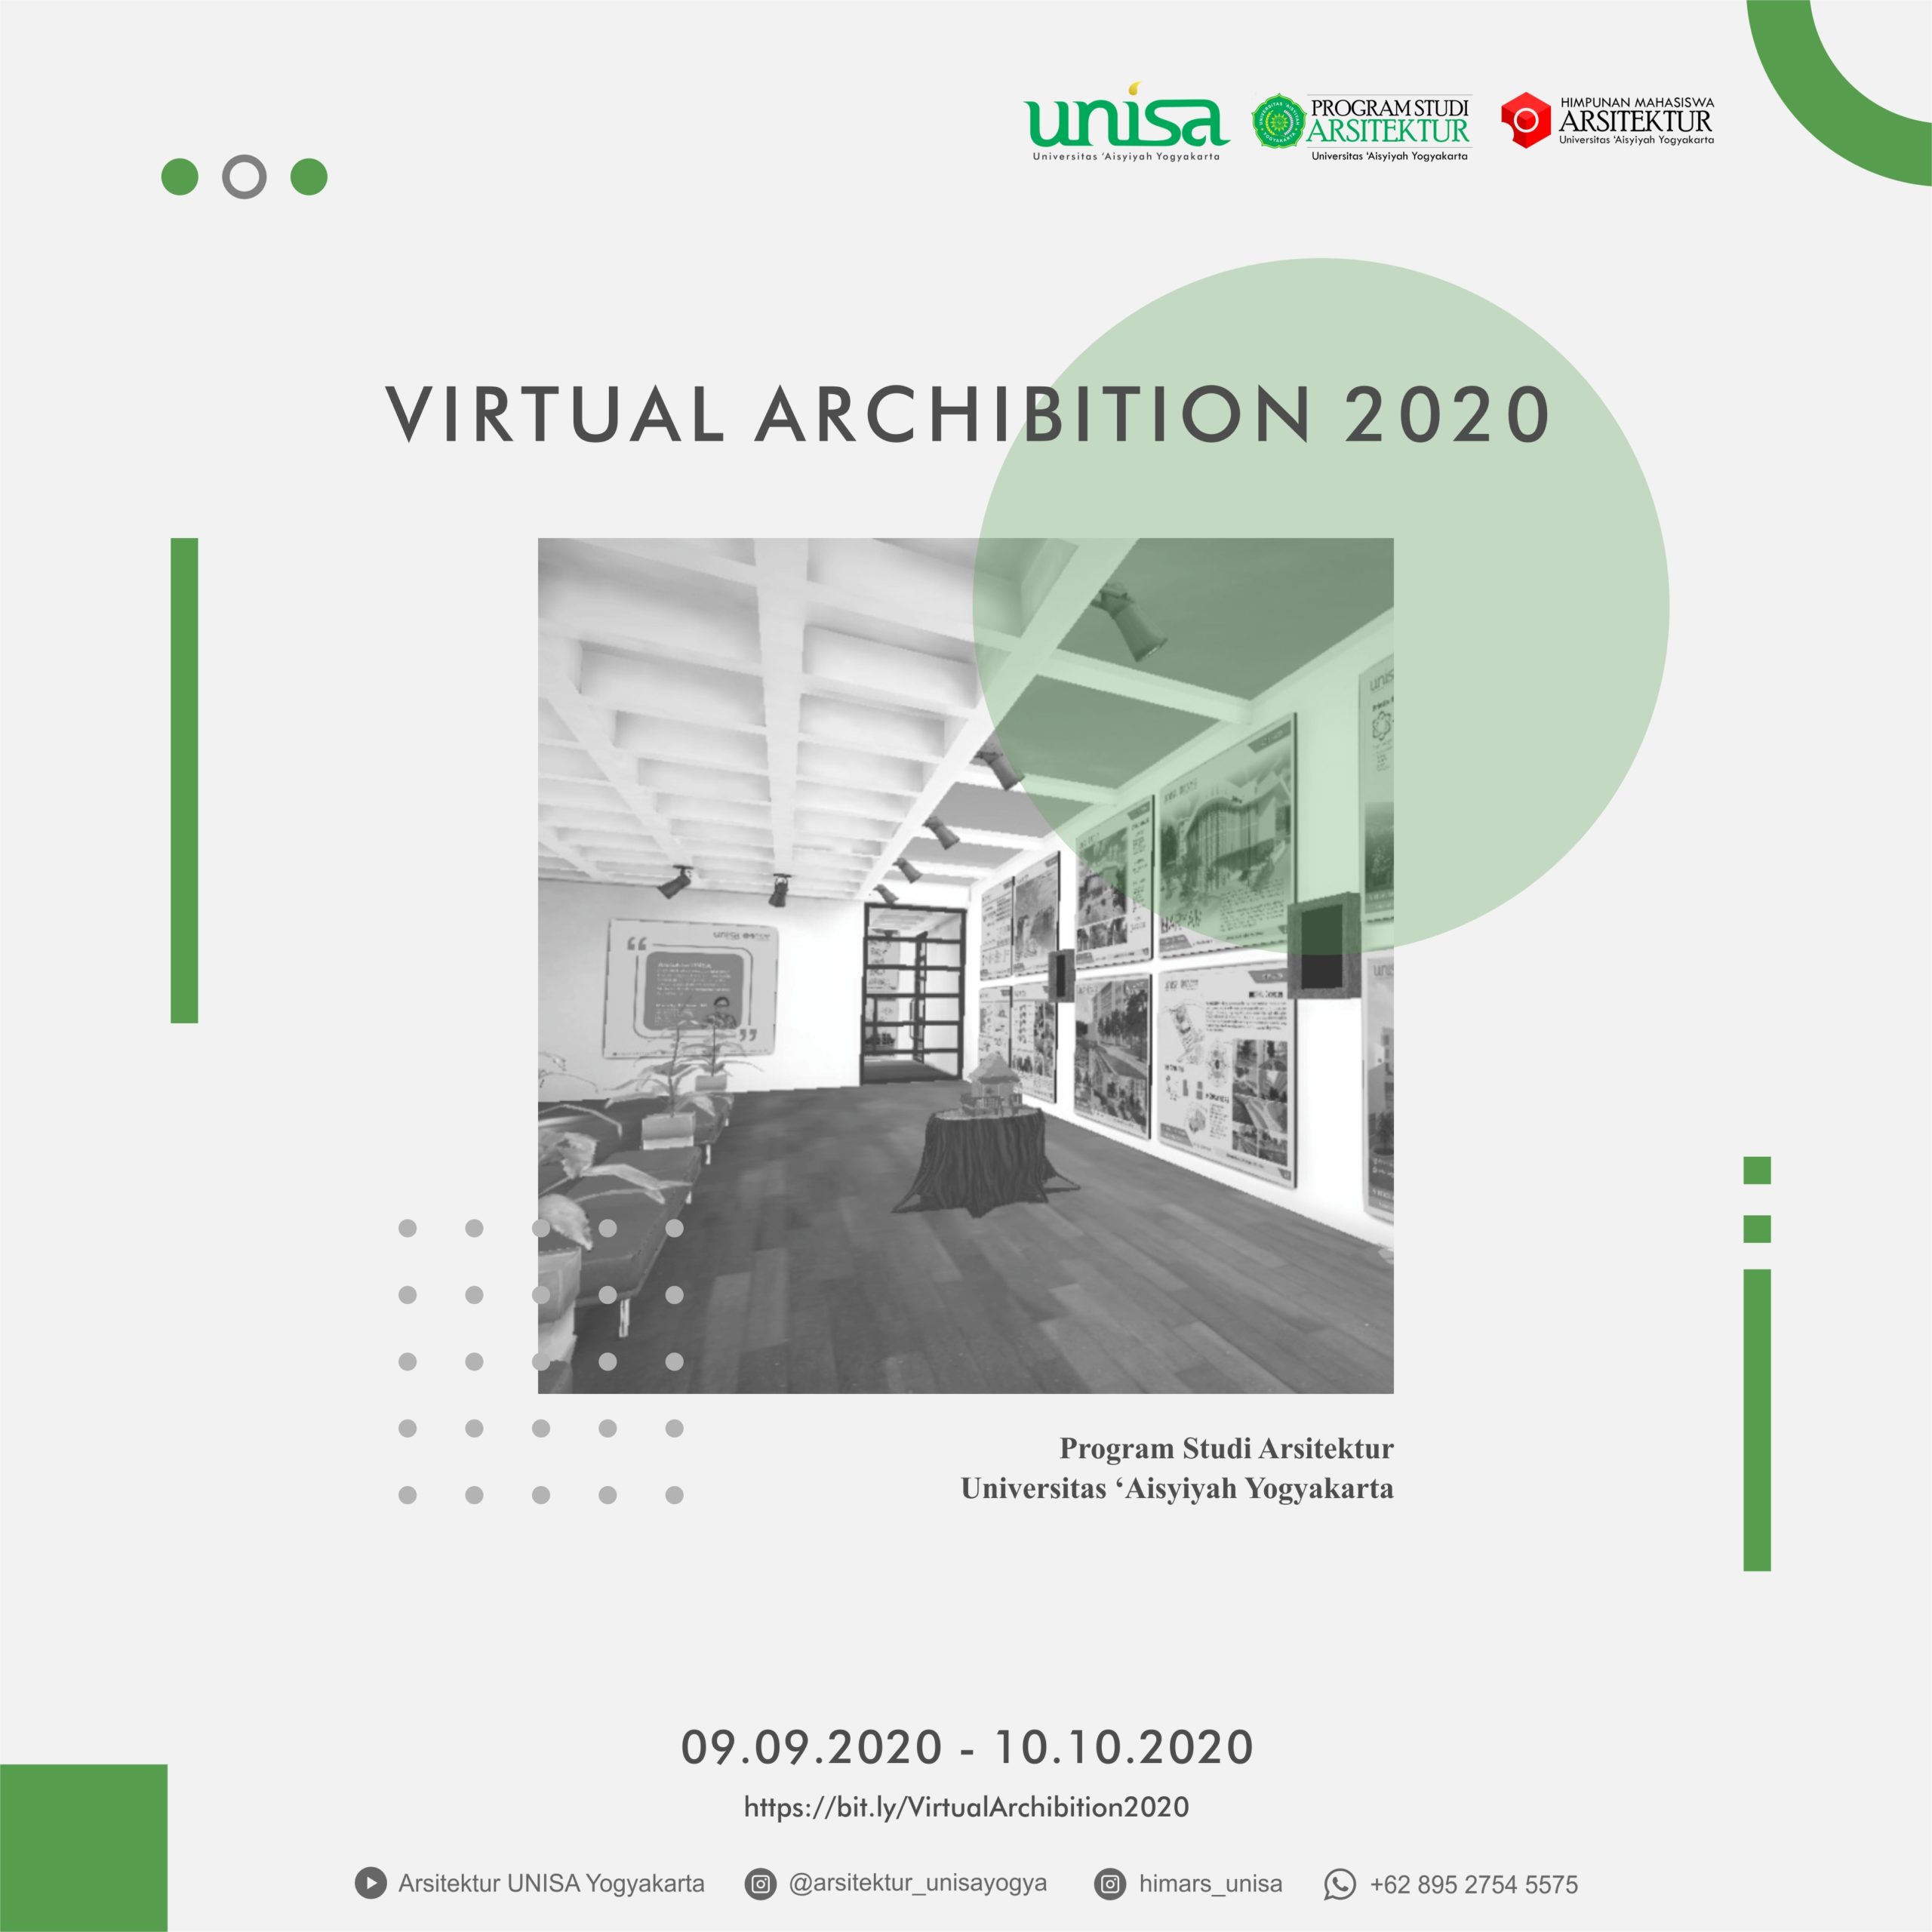 Program Studi Arsitektur Unisa Yogyakarta Mengadakan Virtual Archibition 2020 sebagai Adaptasi New Normal